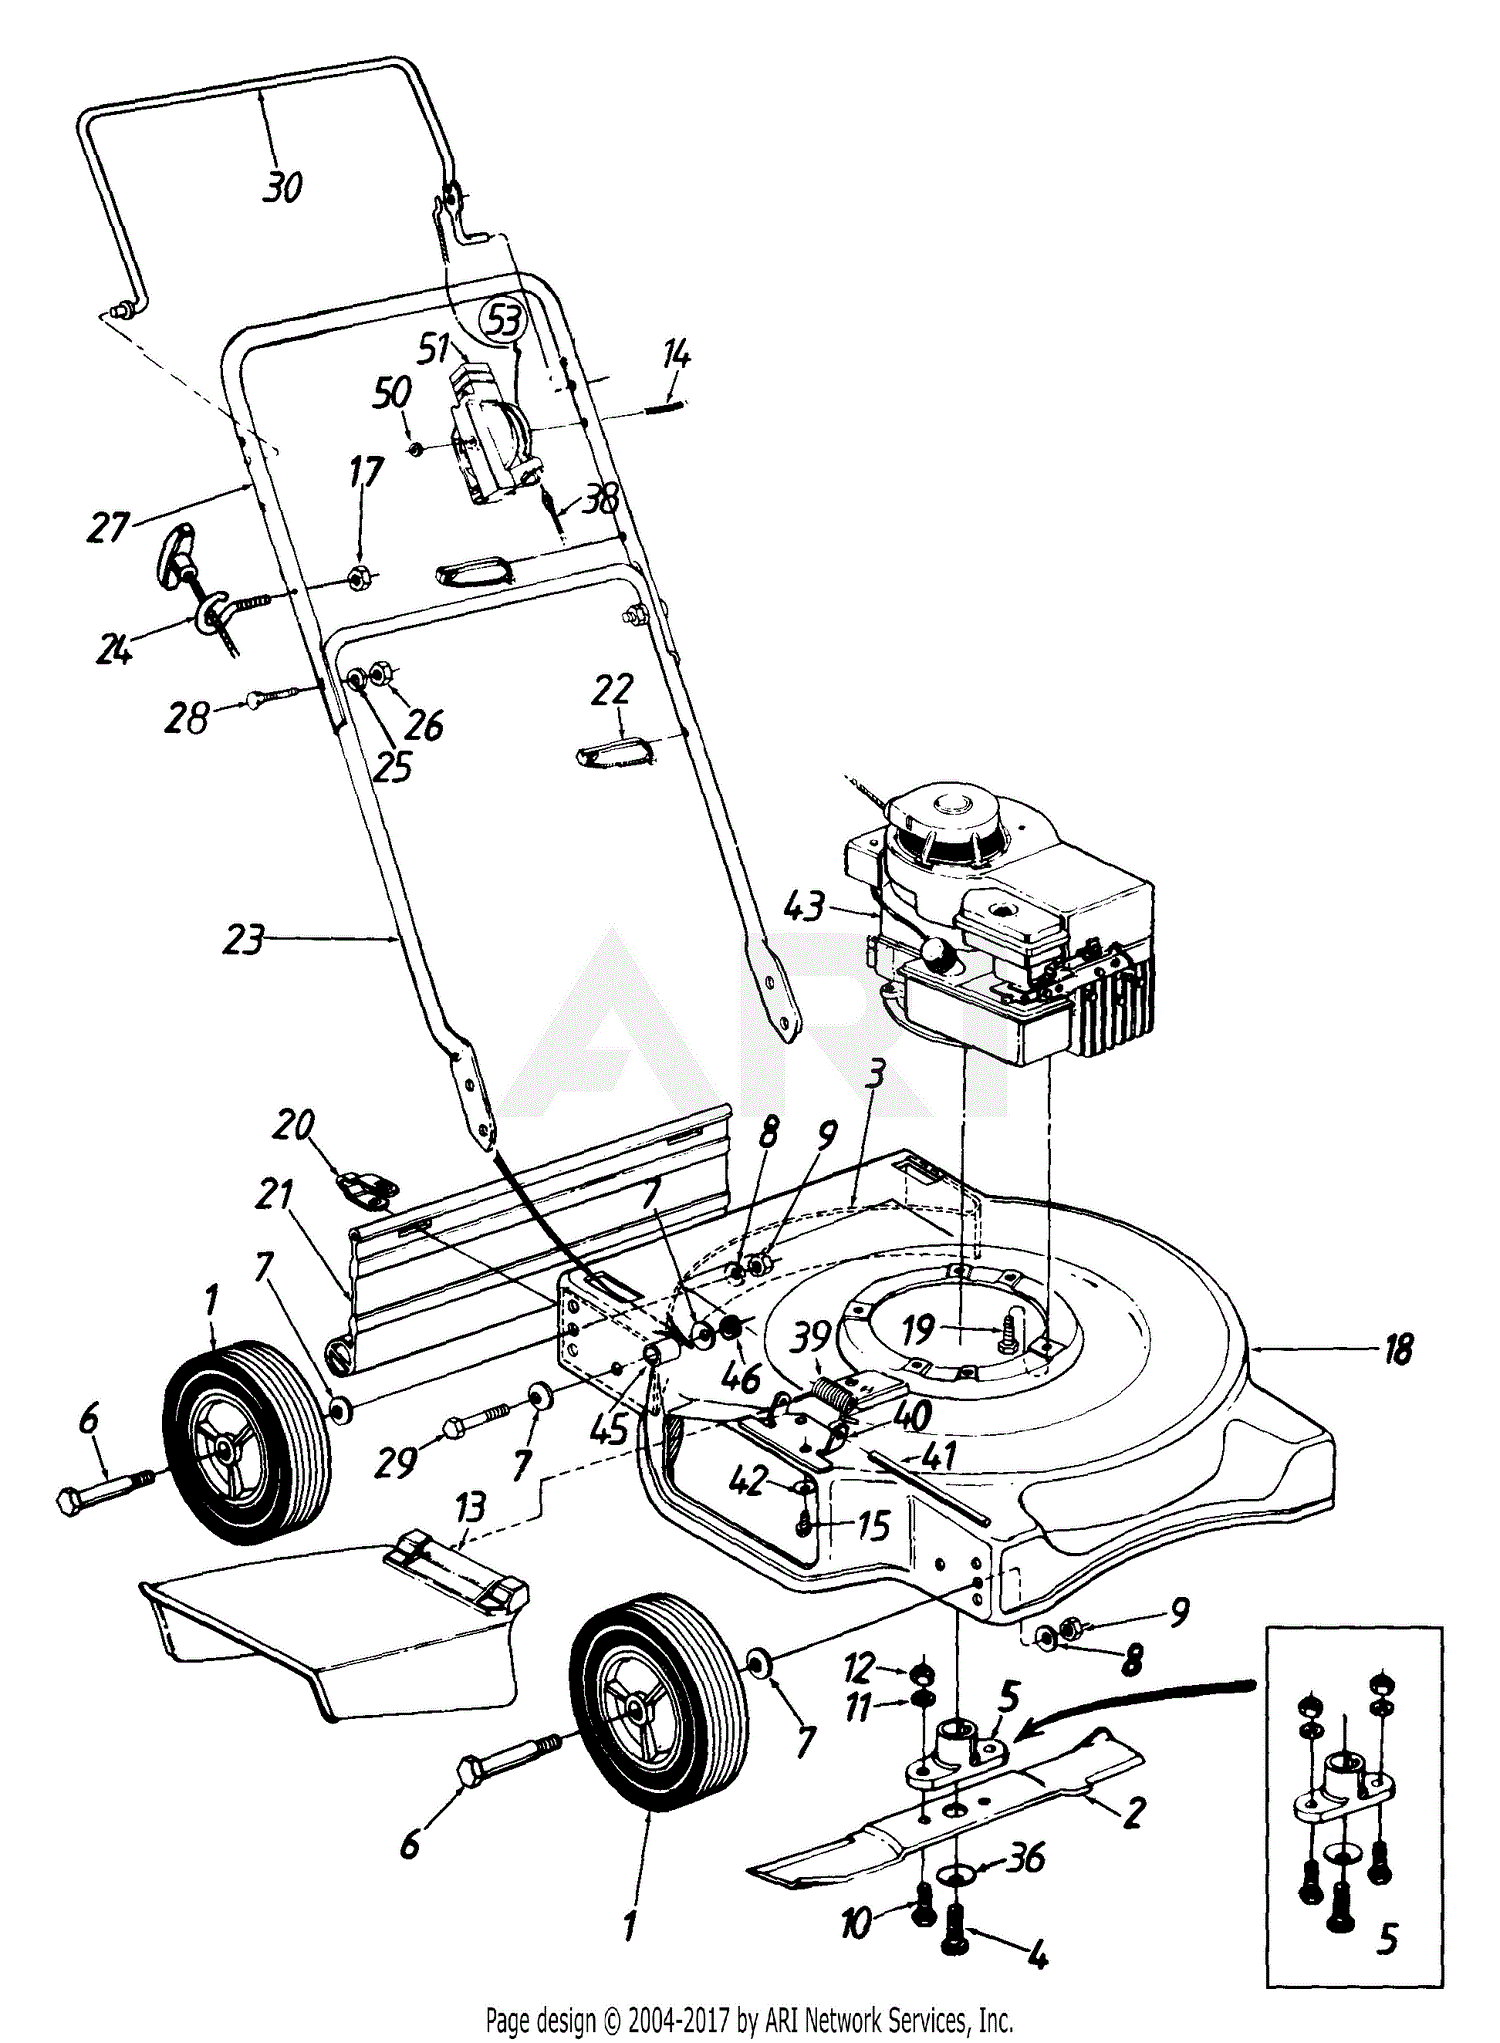 White Riding Lawn Mower Parts Diagram